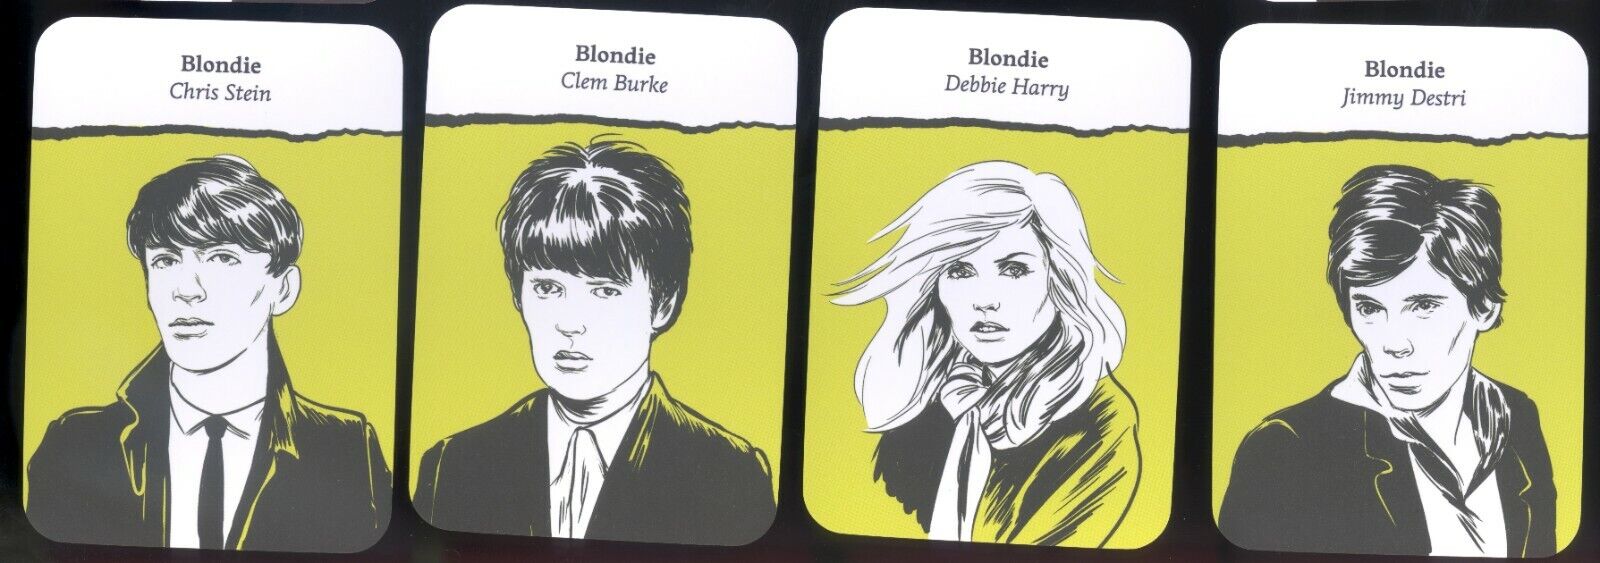 Blondie Complete Card Set of 4 Mint 2018 Debbie Harry Destri Stein Clem Burke